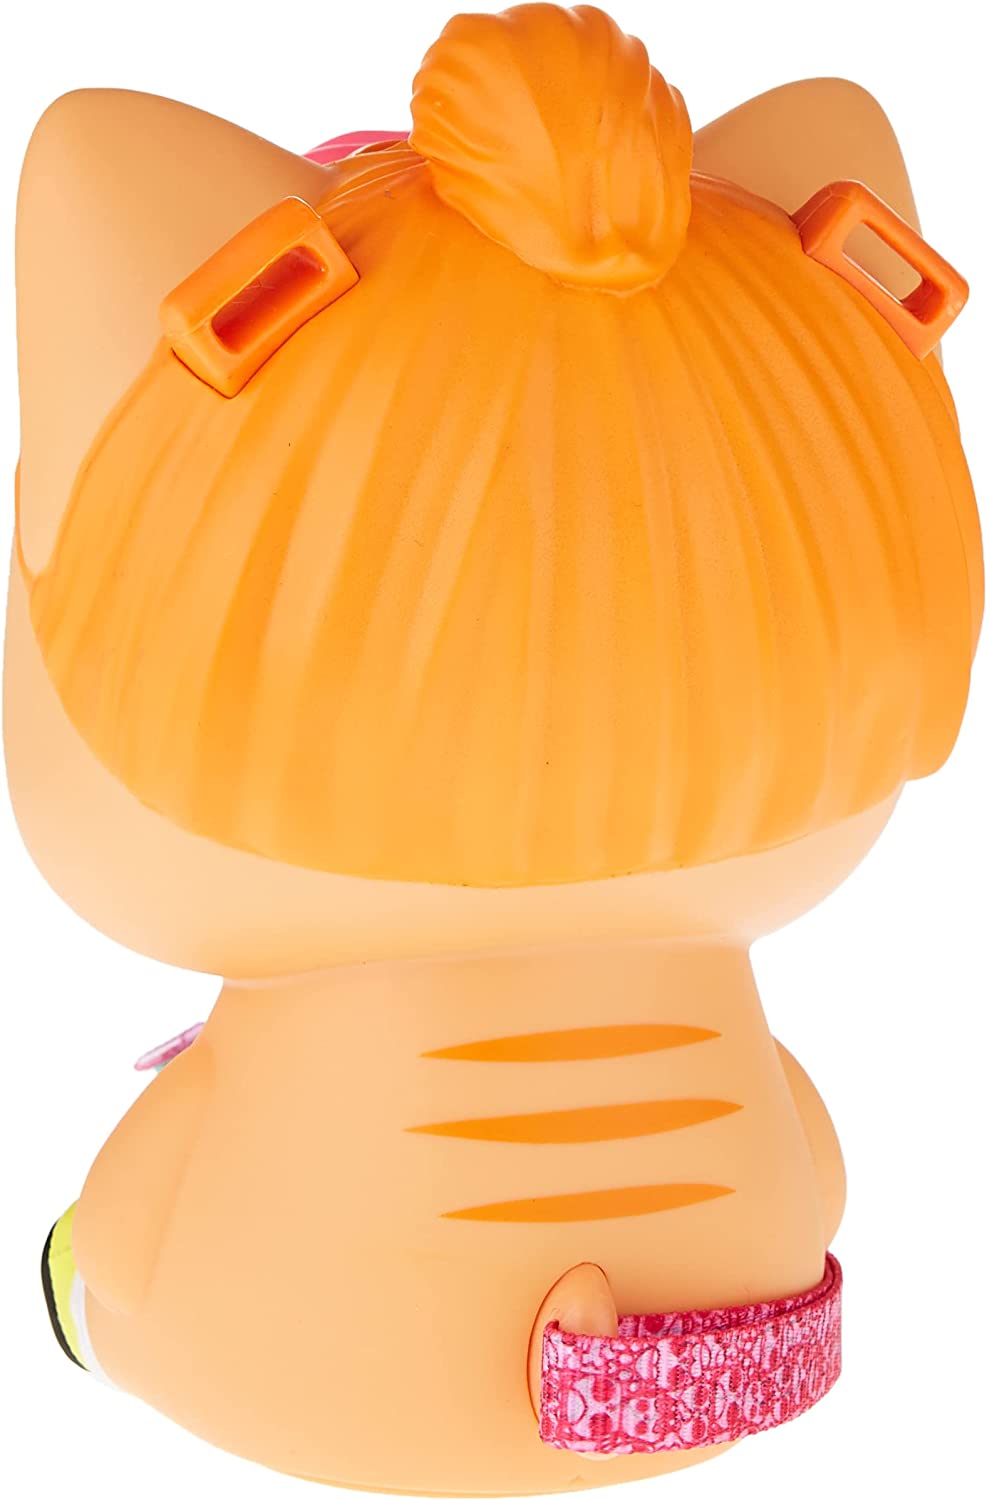 L.O.L Toys L.O.L. Surprise Big Pets - Neon Kitty